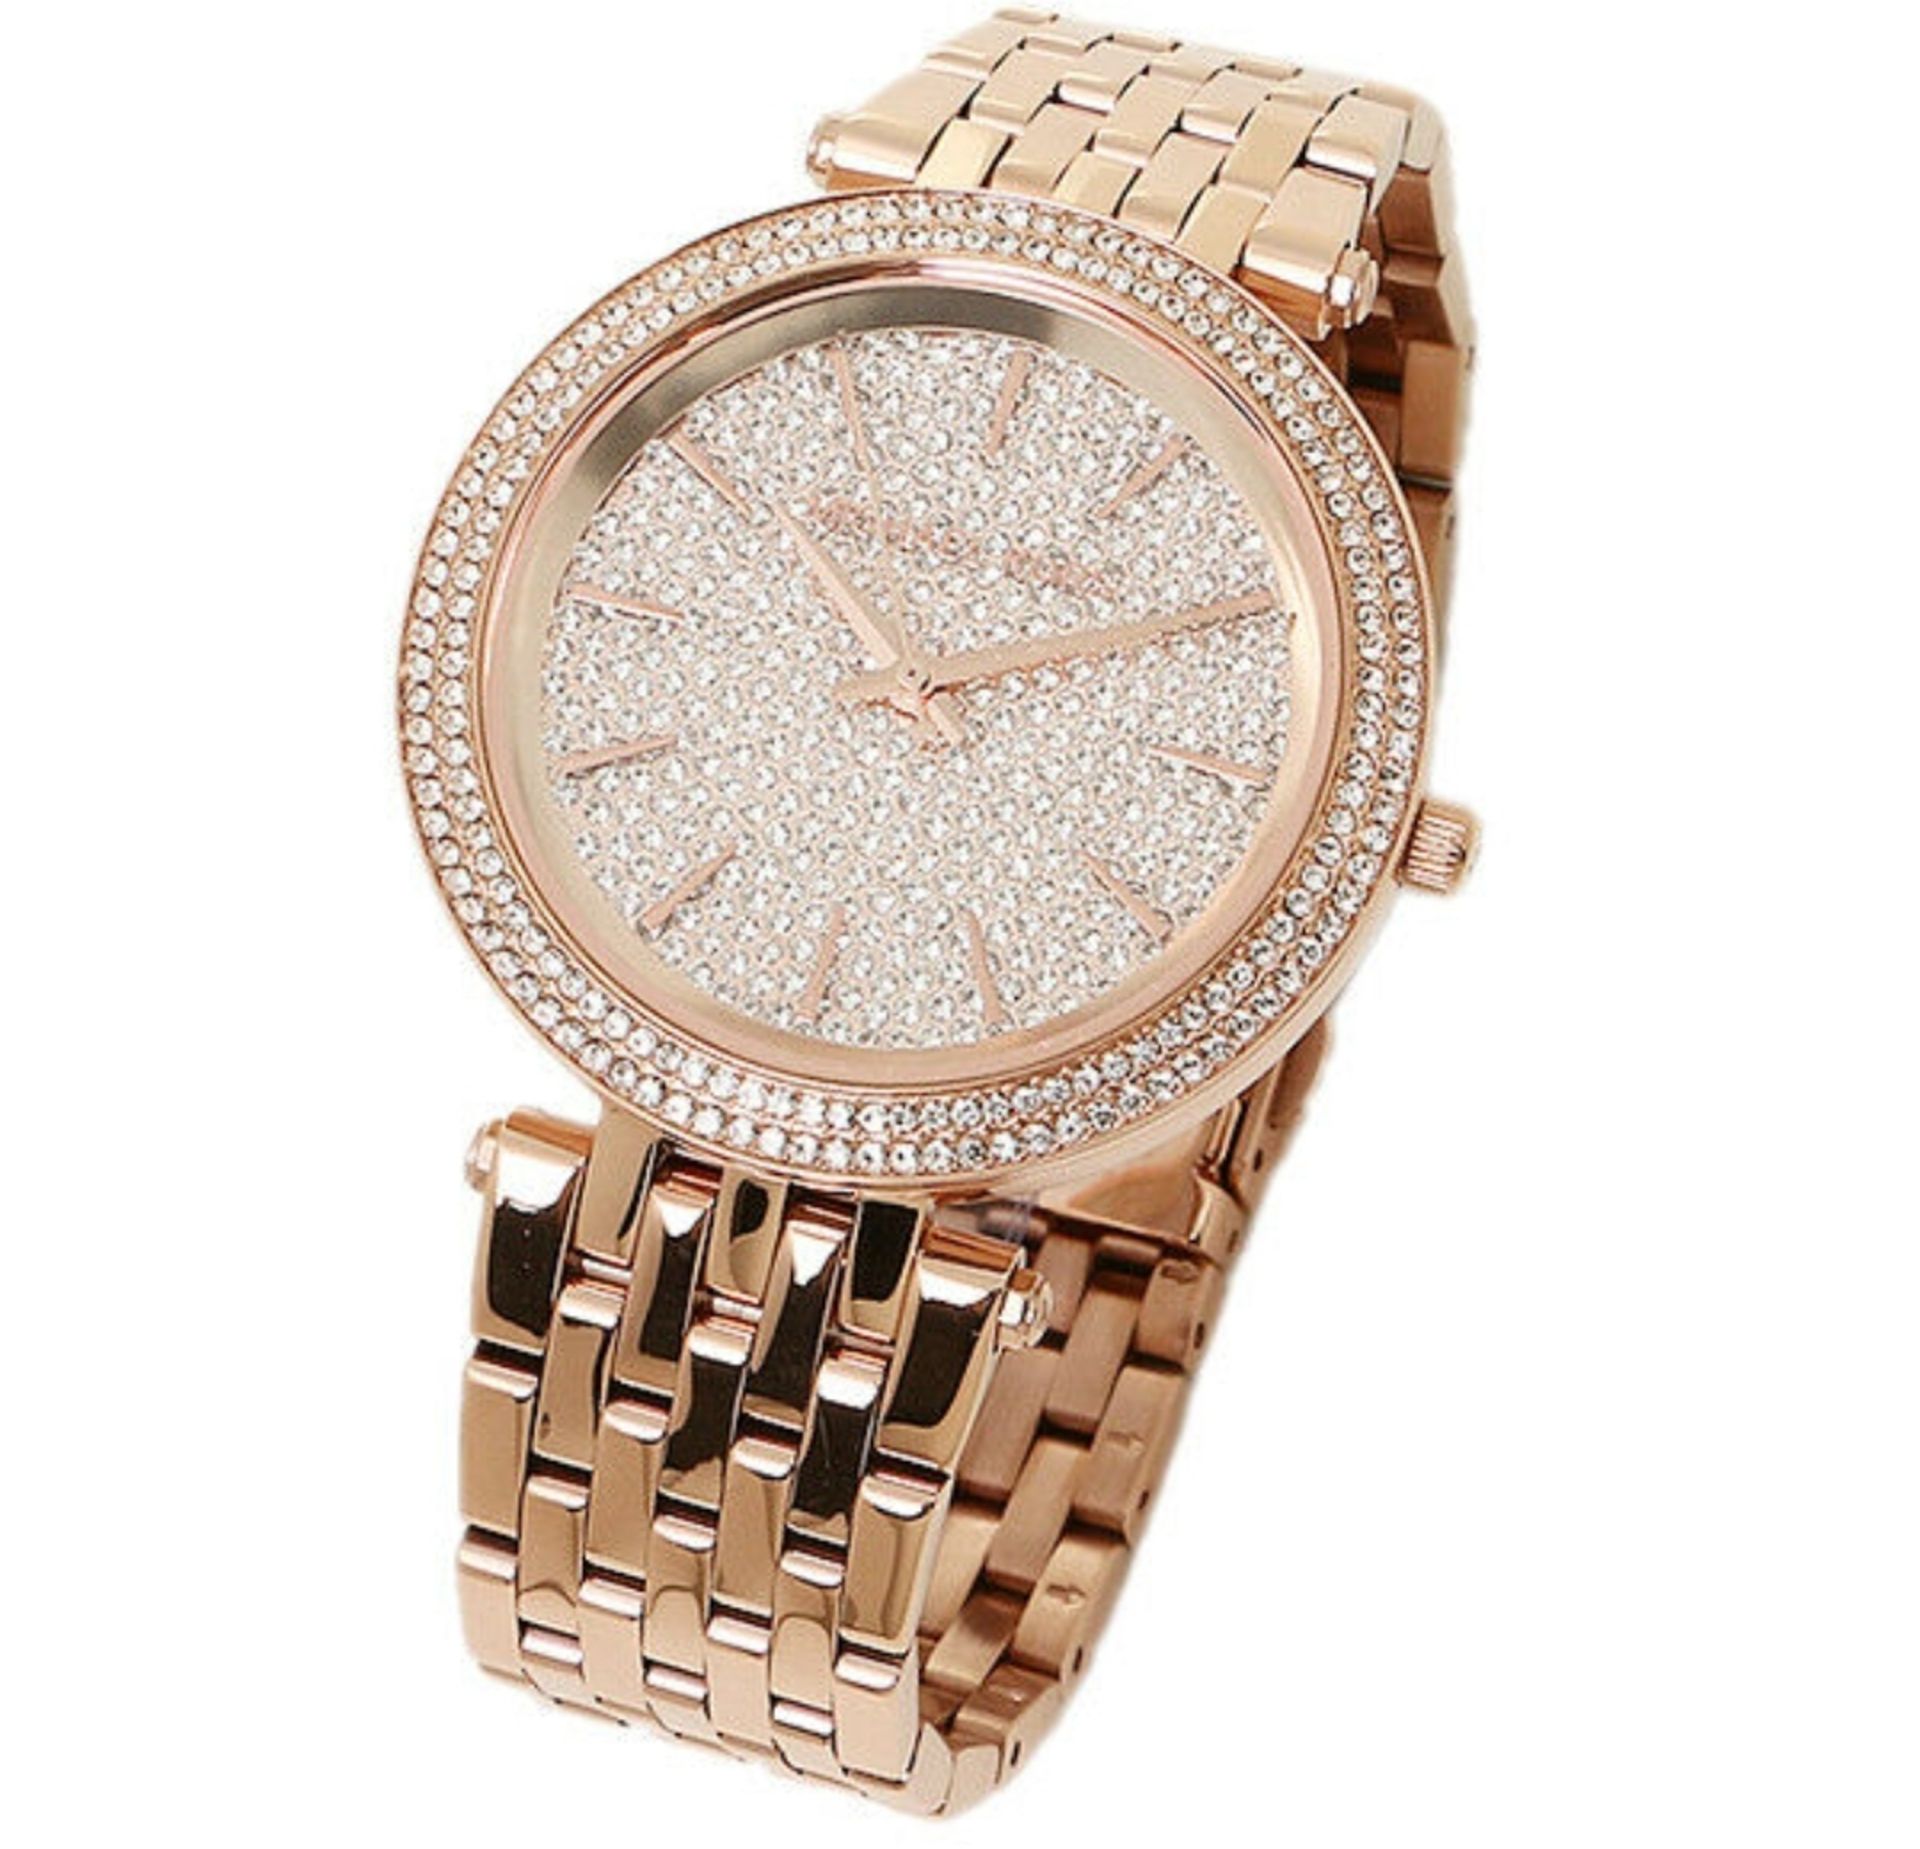 Michael Kors MK3439 Ladies Rose Gold Darci Quartz Watch - Image 4 of 5